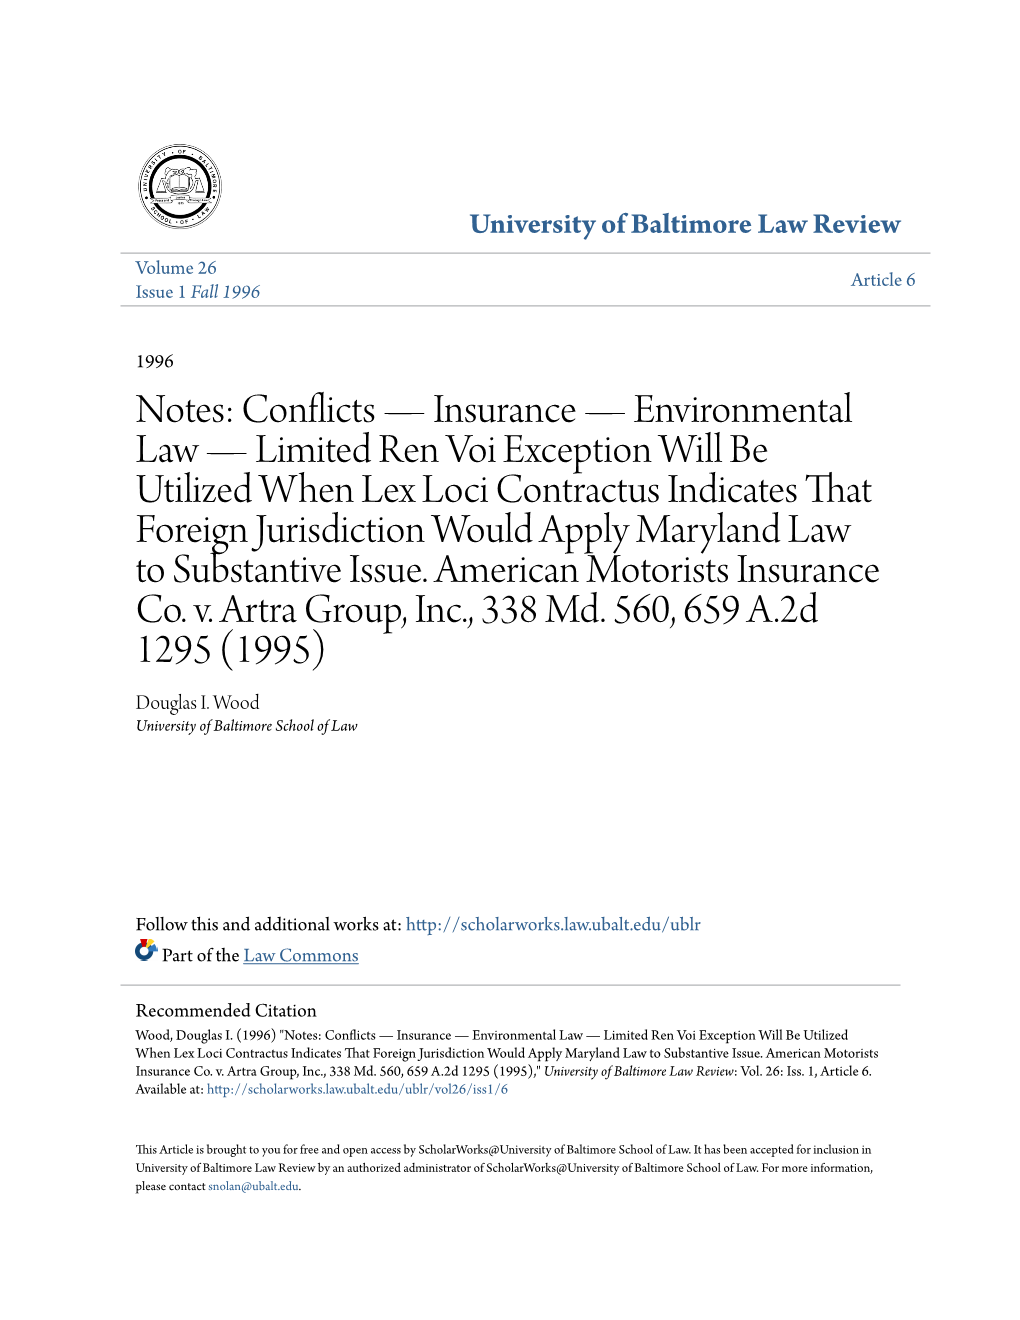 Notes: Conflicts Â•Fl Insurance Â•Fl Environmental Law Â•Fl Limited Ren